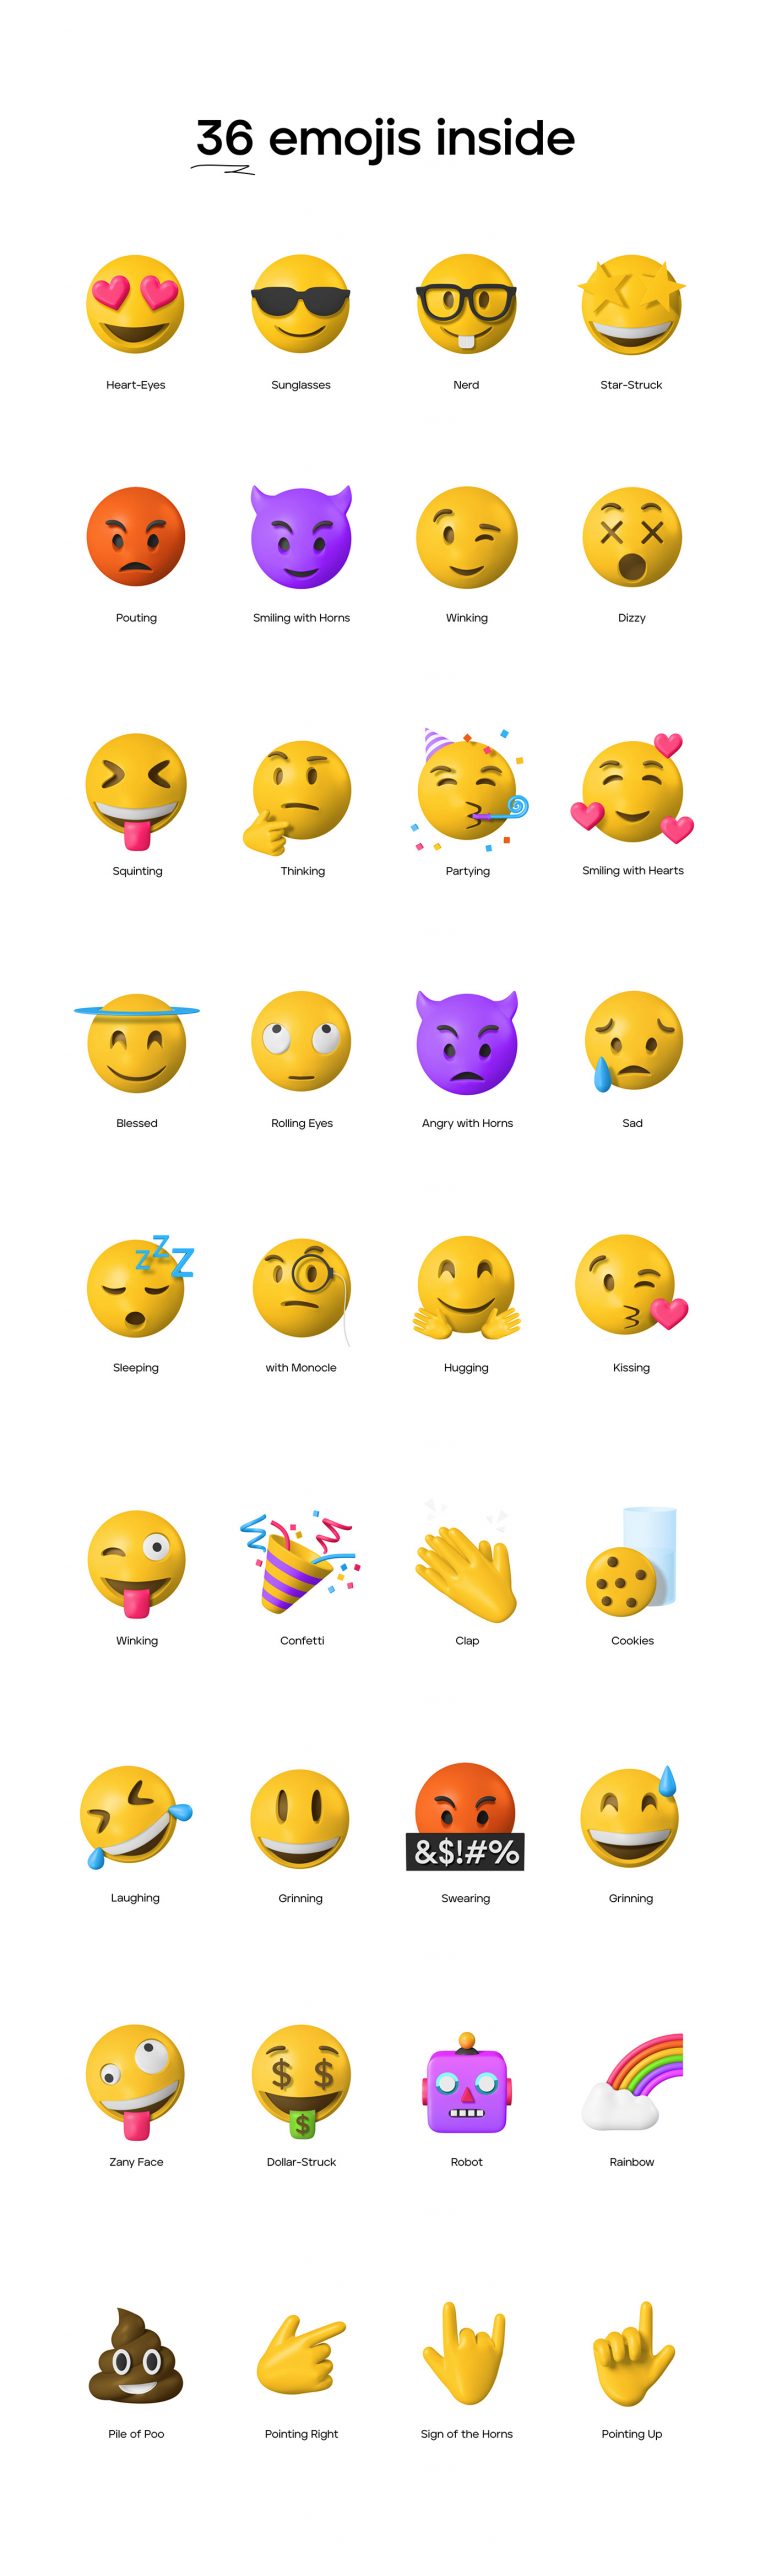 Anton mishin 高分辨率3D可爱emoji表情包图标 图标素材 第7张